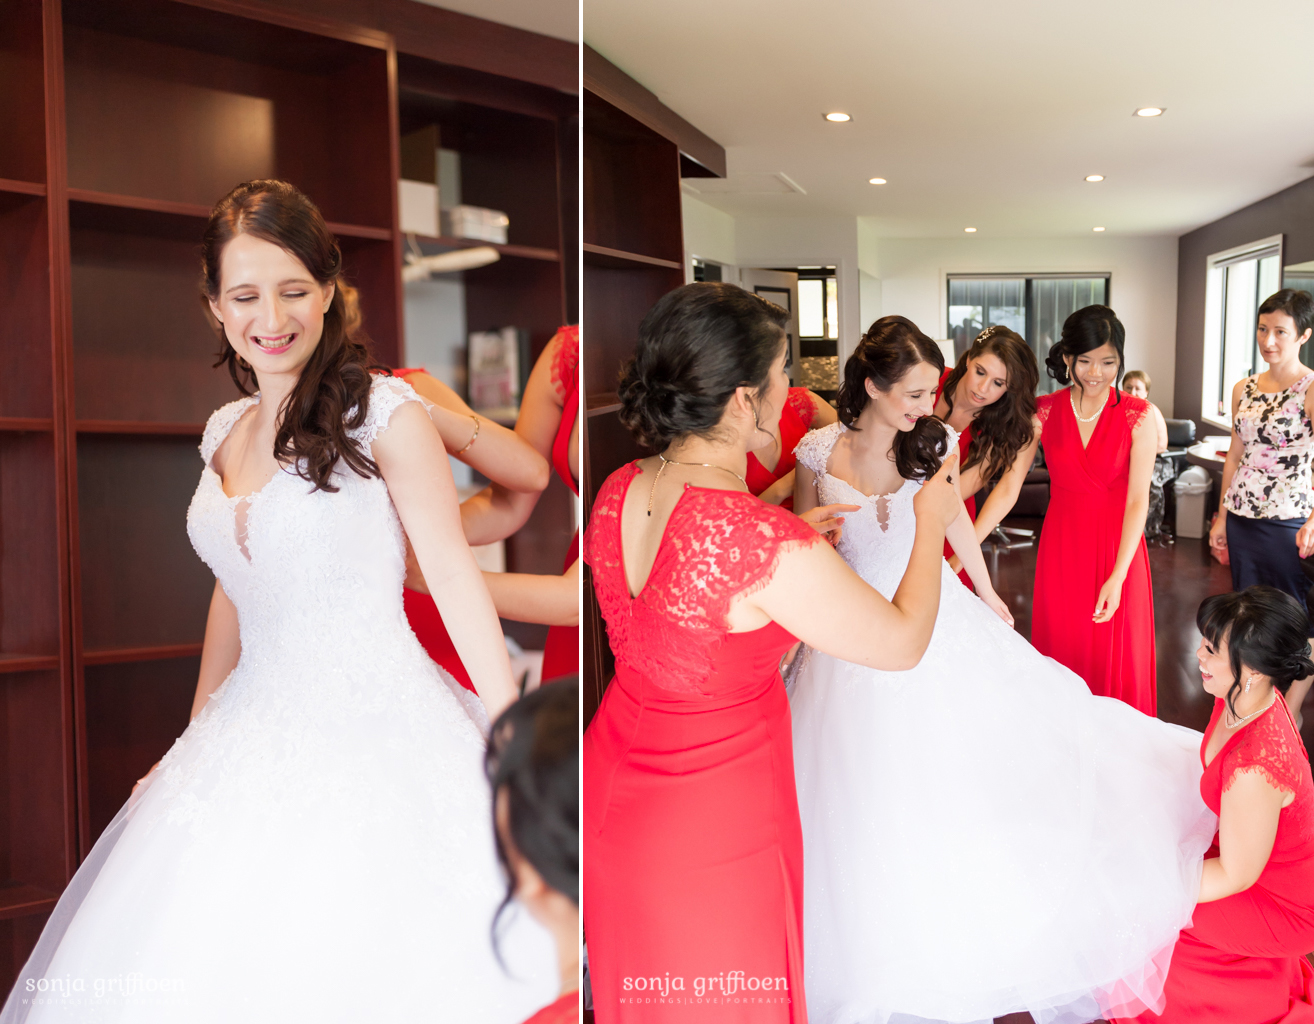 Walther-Wedding-Bride-Getting-Ready-Brisbane-Wedding-Photographer-Sonja-Griffioen-9-copy.jpg